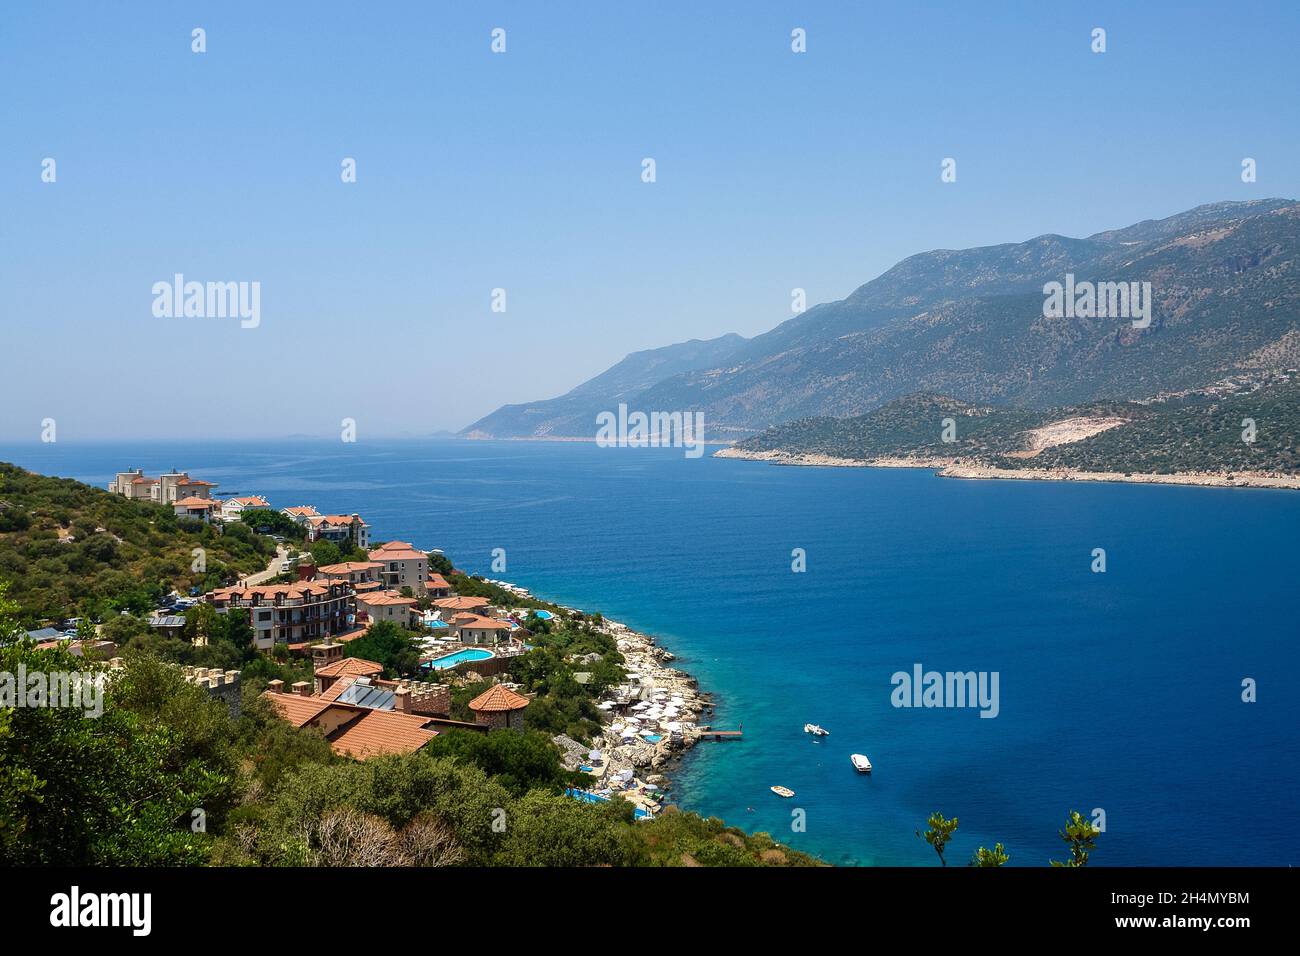 Mediterranean coastline in Kas town of Antalya province of Turkey. Stock Photo